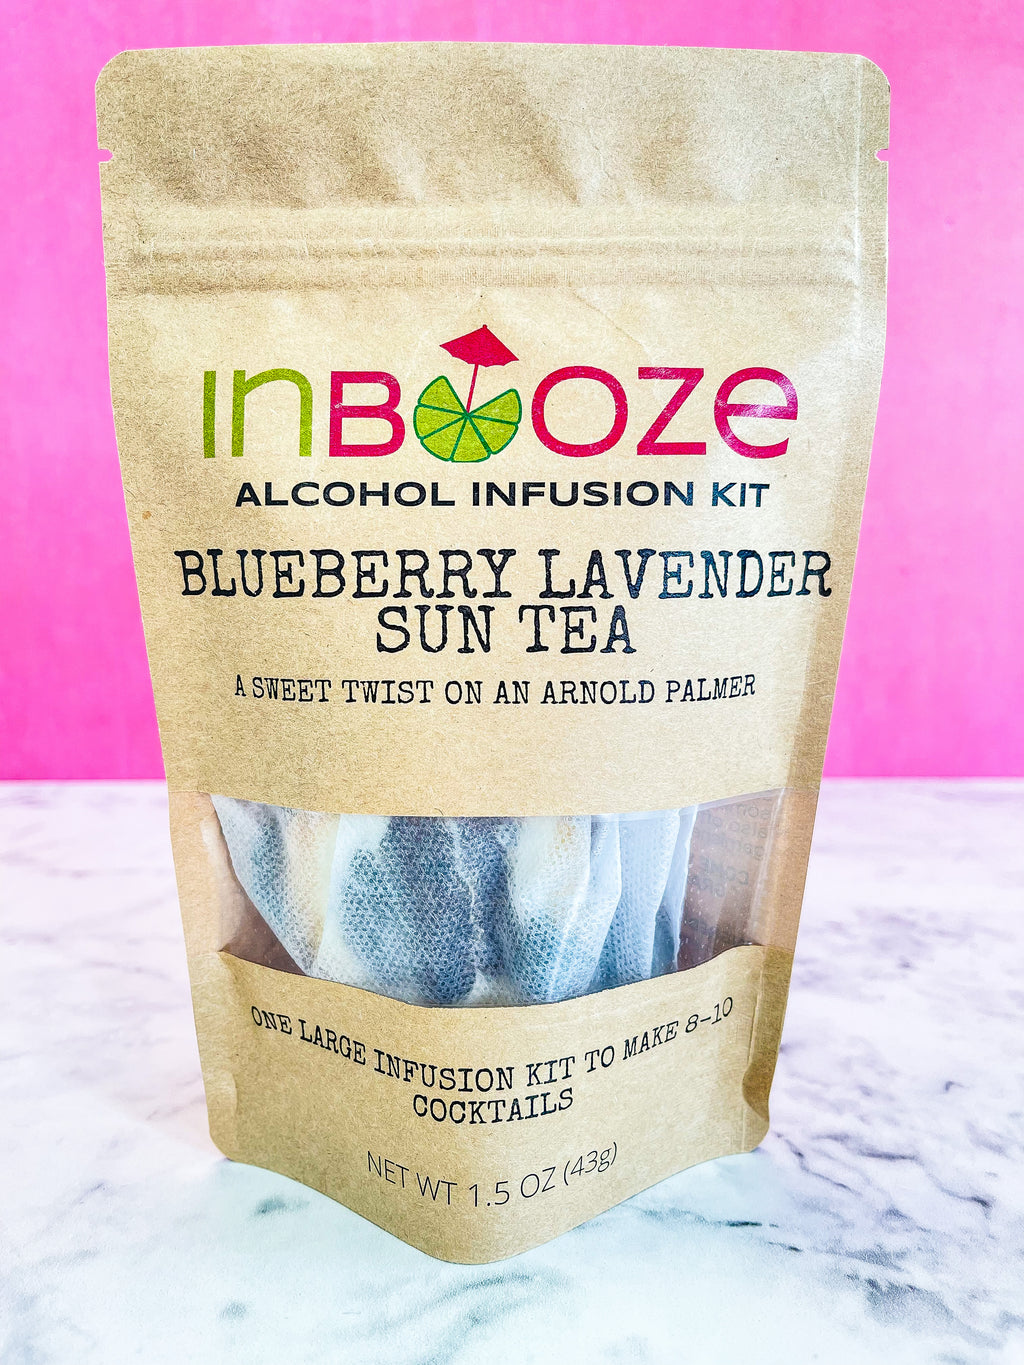 Blueberry Lavender Sun Tea Alcohol Infusion Cocktail Kit